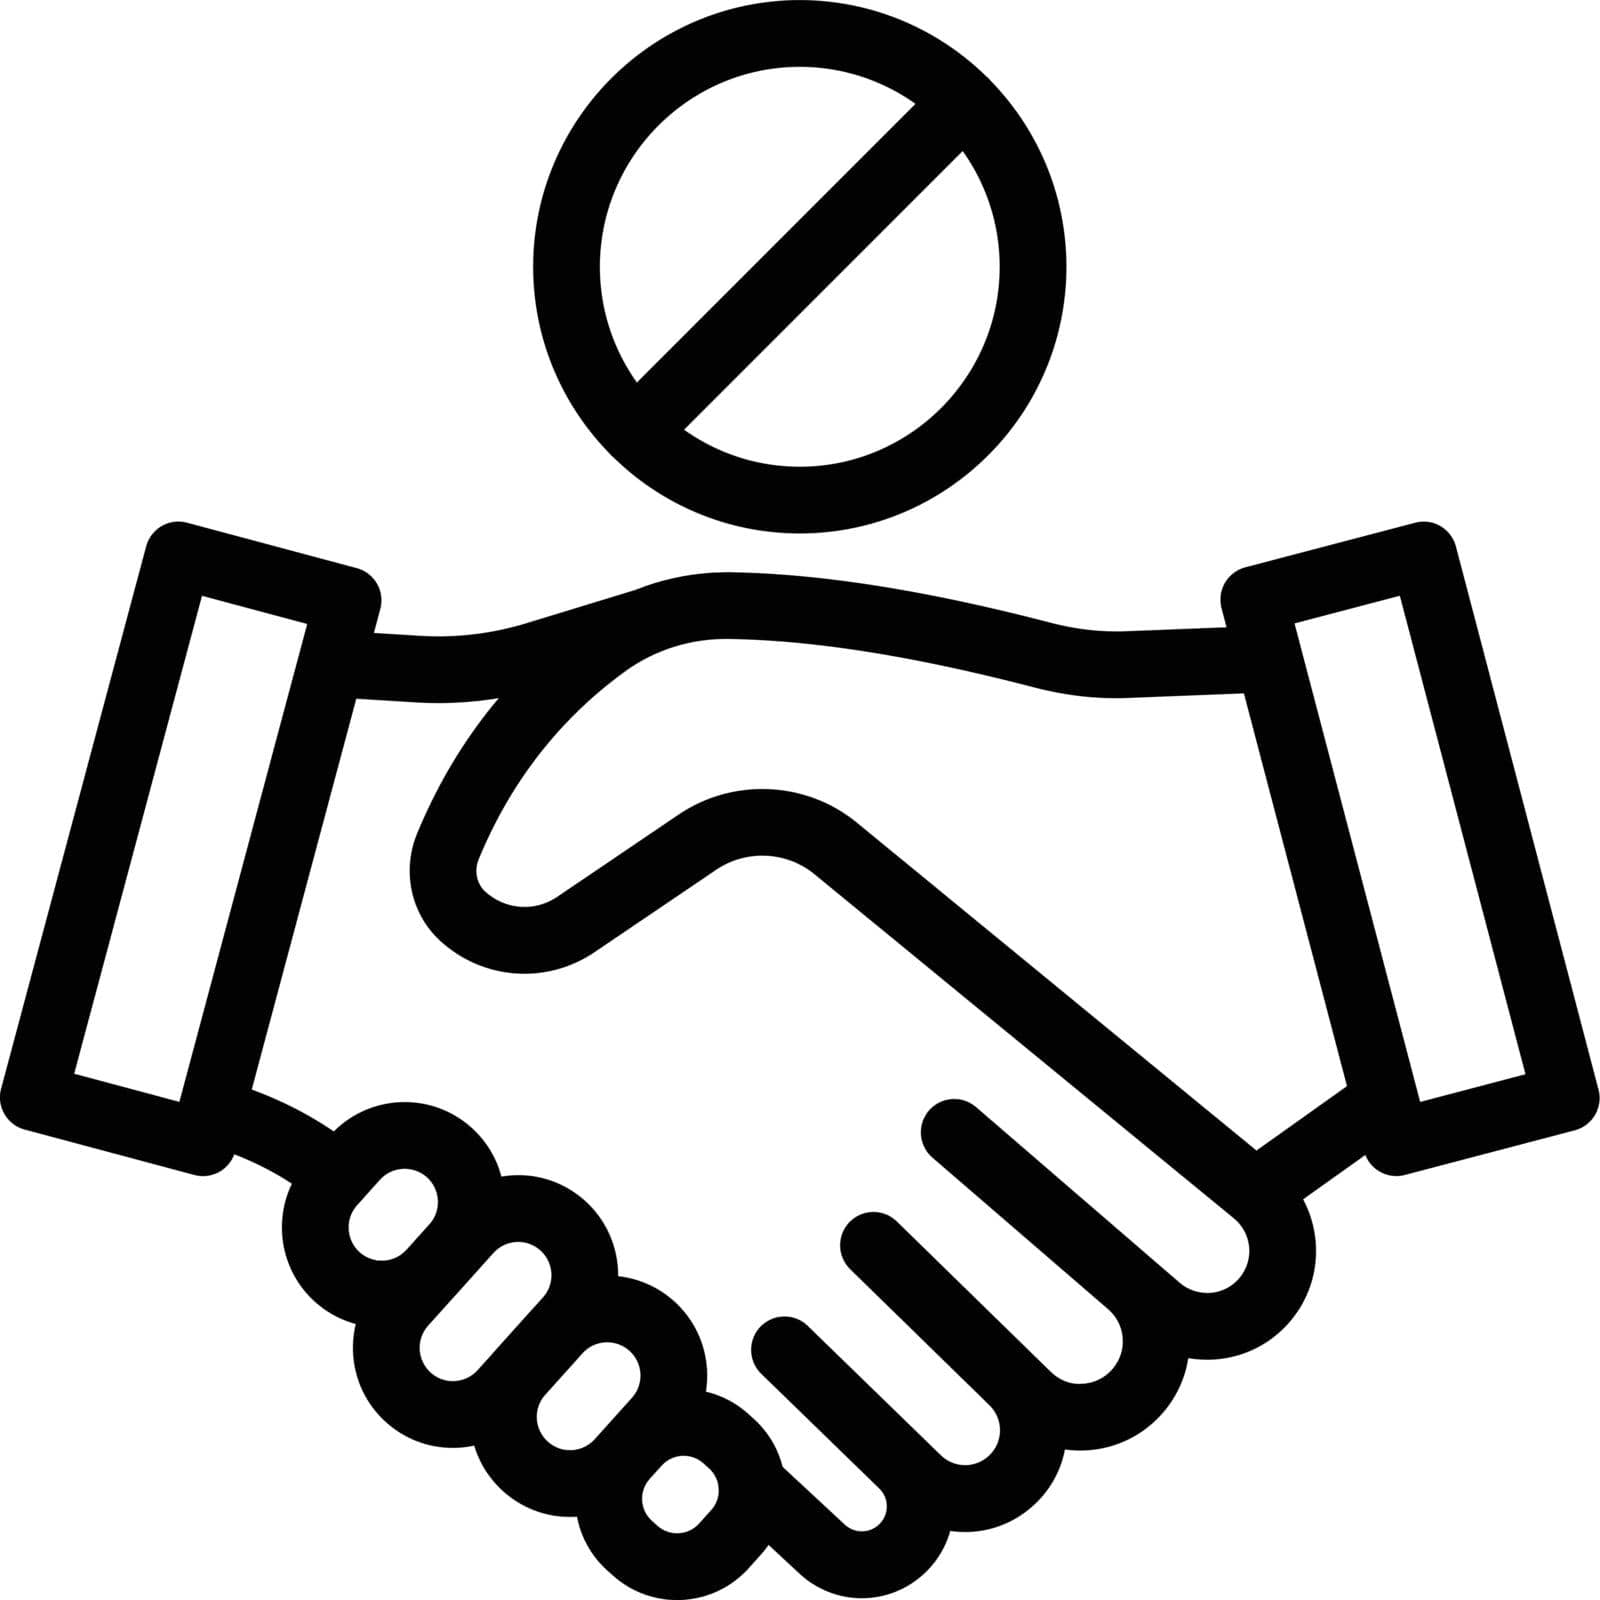 no handshake by FlaticonsDesign